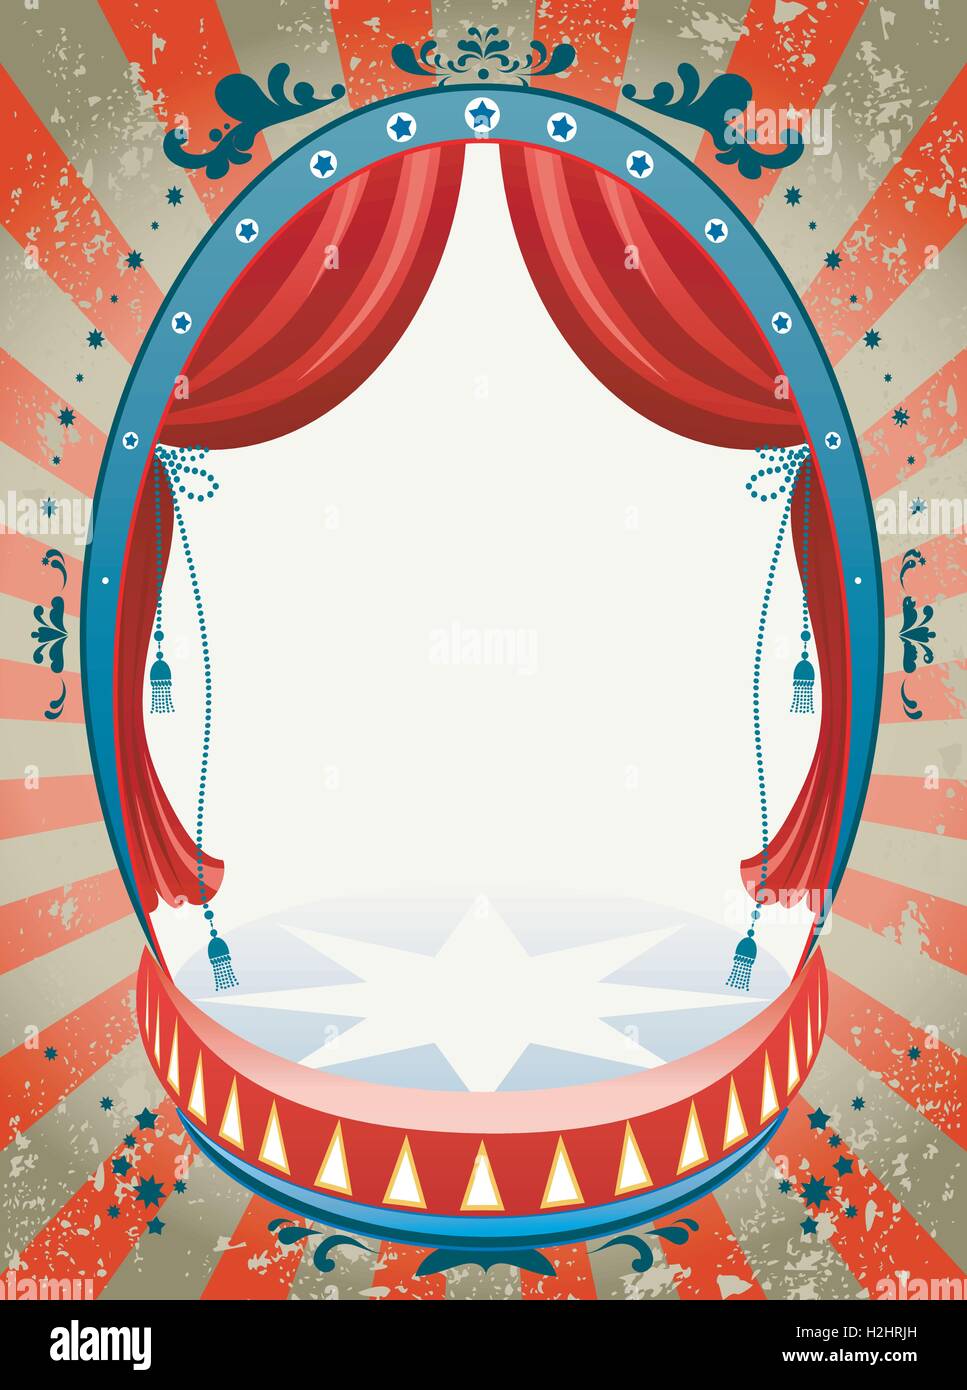 Vintage Circus Hintergrund Stock-Vektorgrafik - Alamy